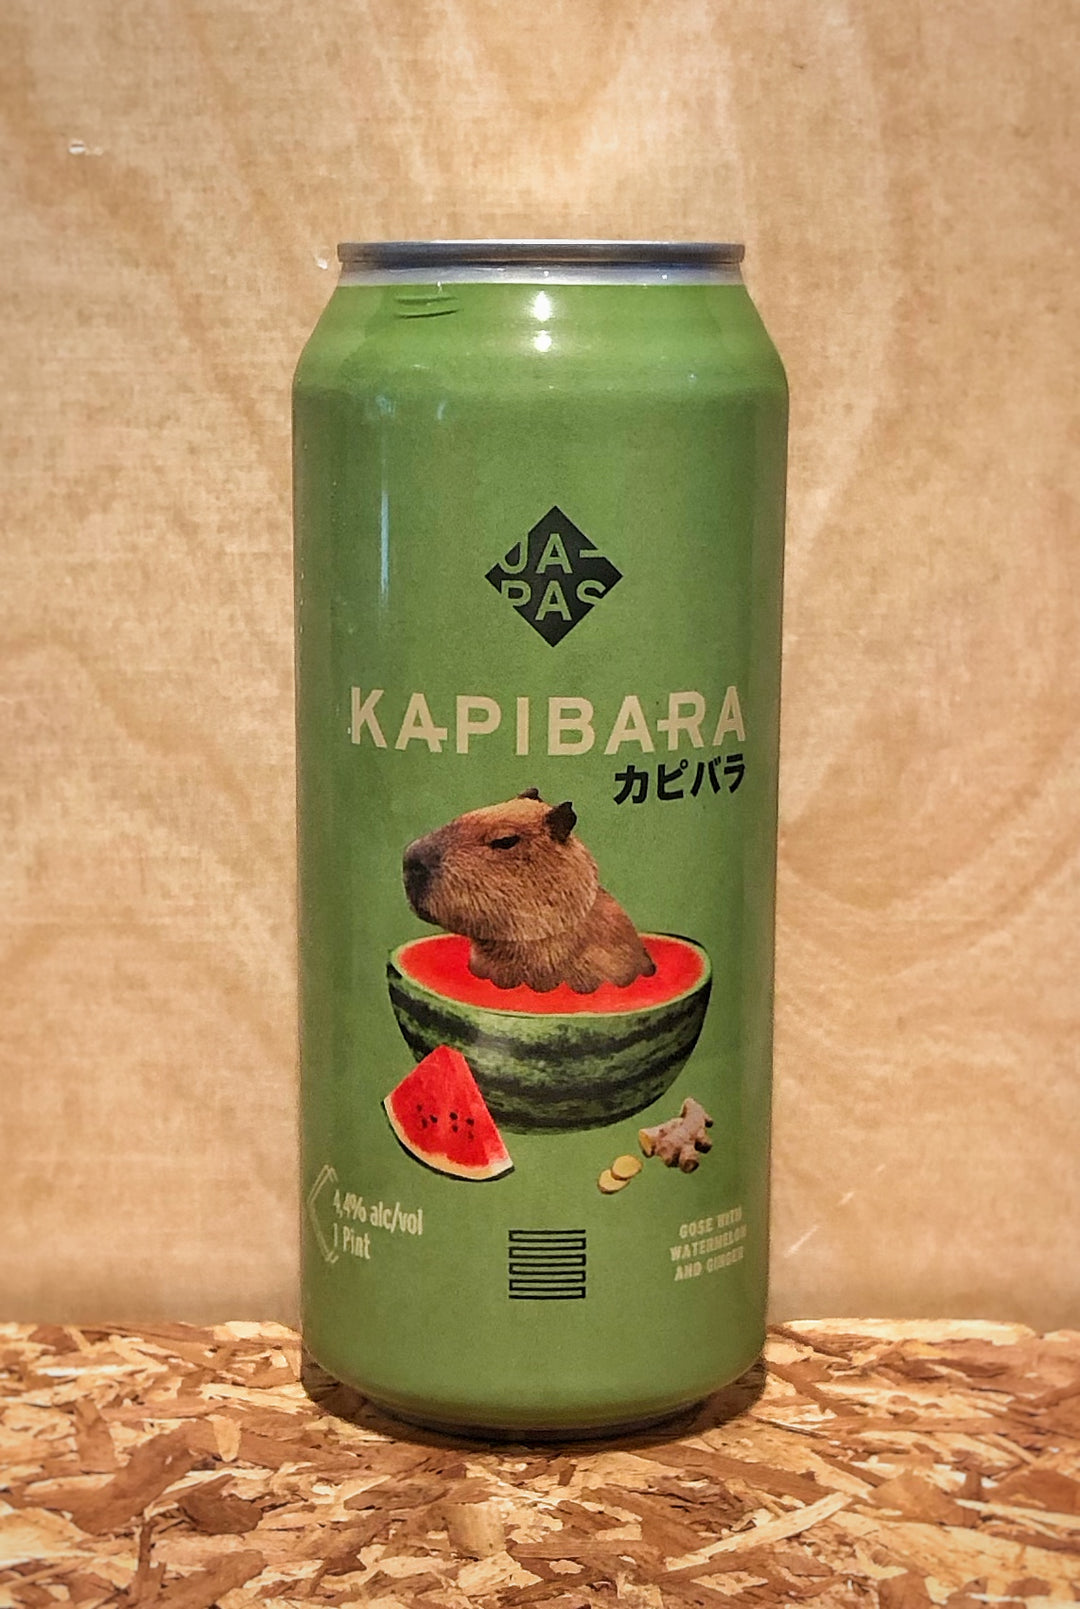 Japas Cervejaria 'Kapibara' Gose with Watermelon and Ginger (Brazil)